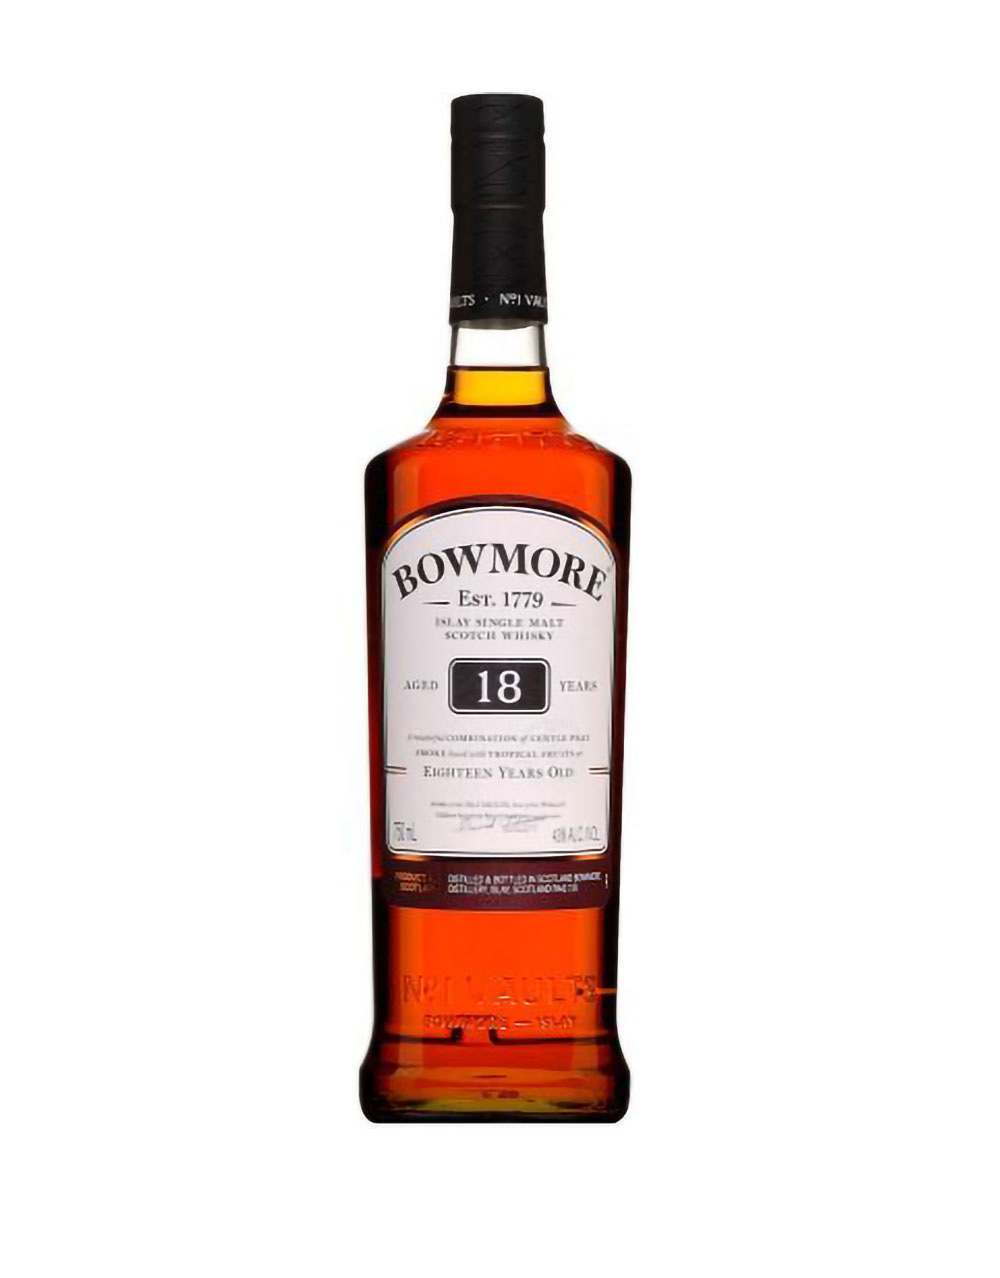 Gordon & Macphail's Mortlach 15 Year Old Single Malt Scotch Whisky